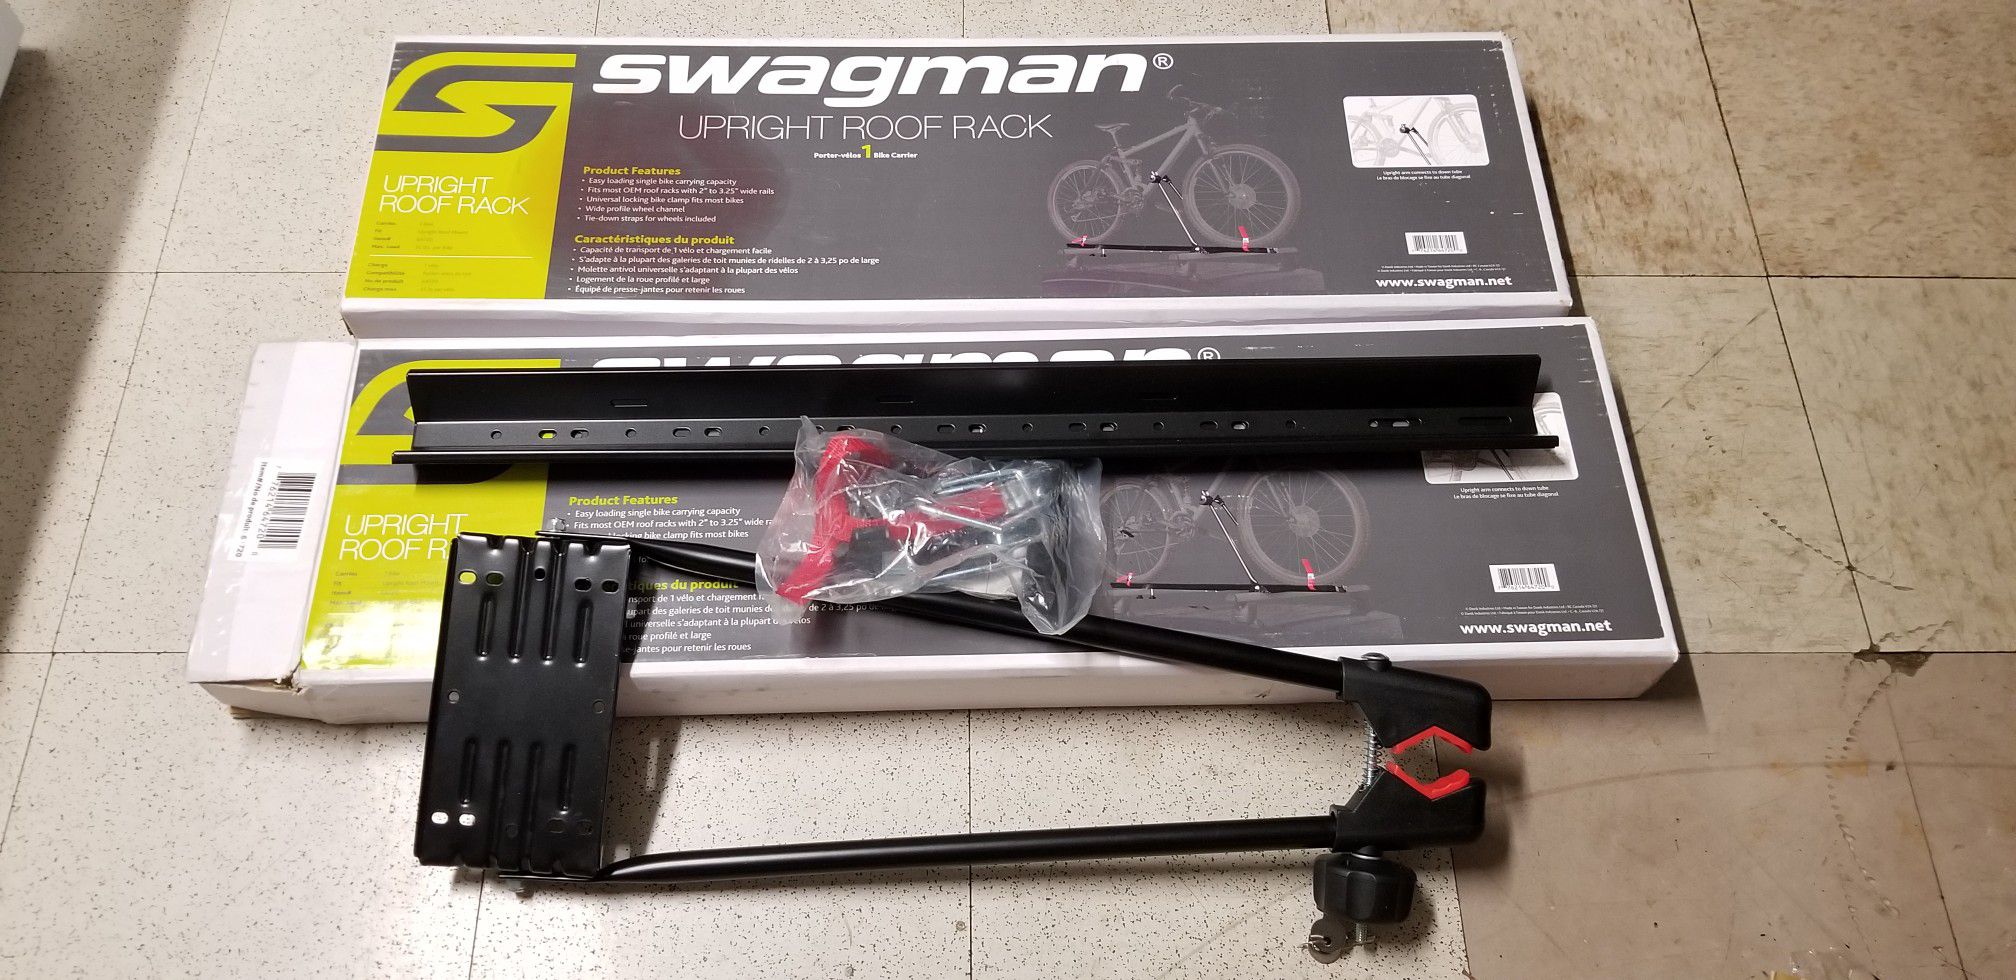 BRAND NEW. Swagman upright roof rack bike carrier